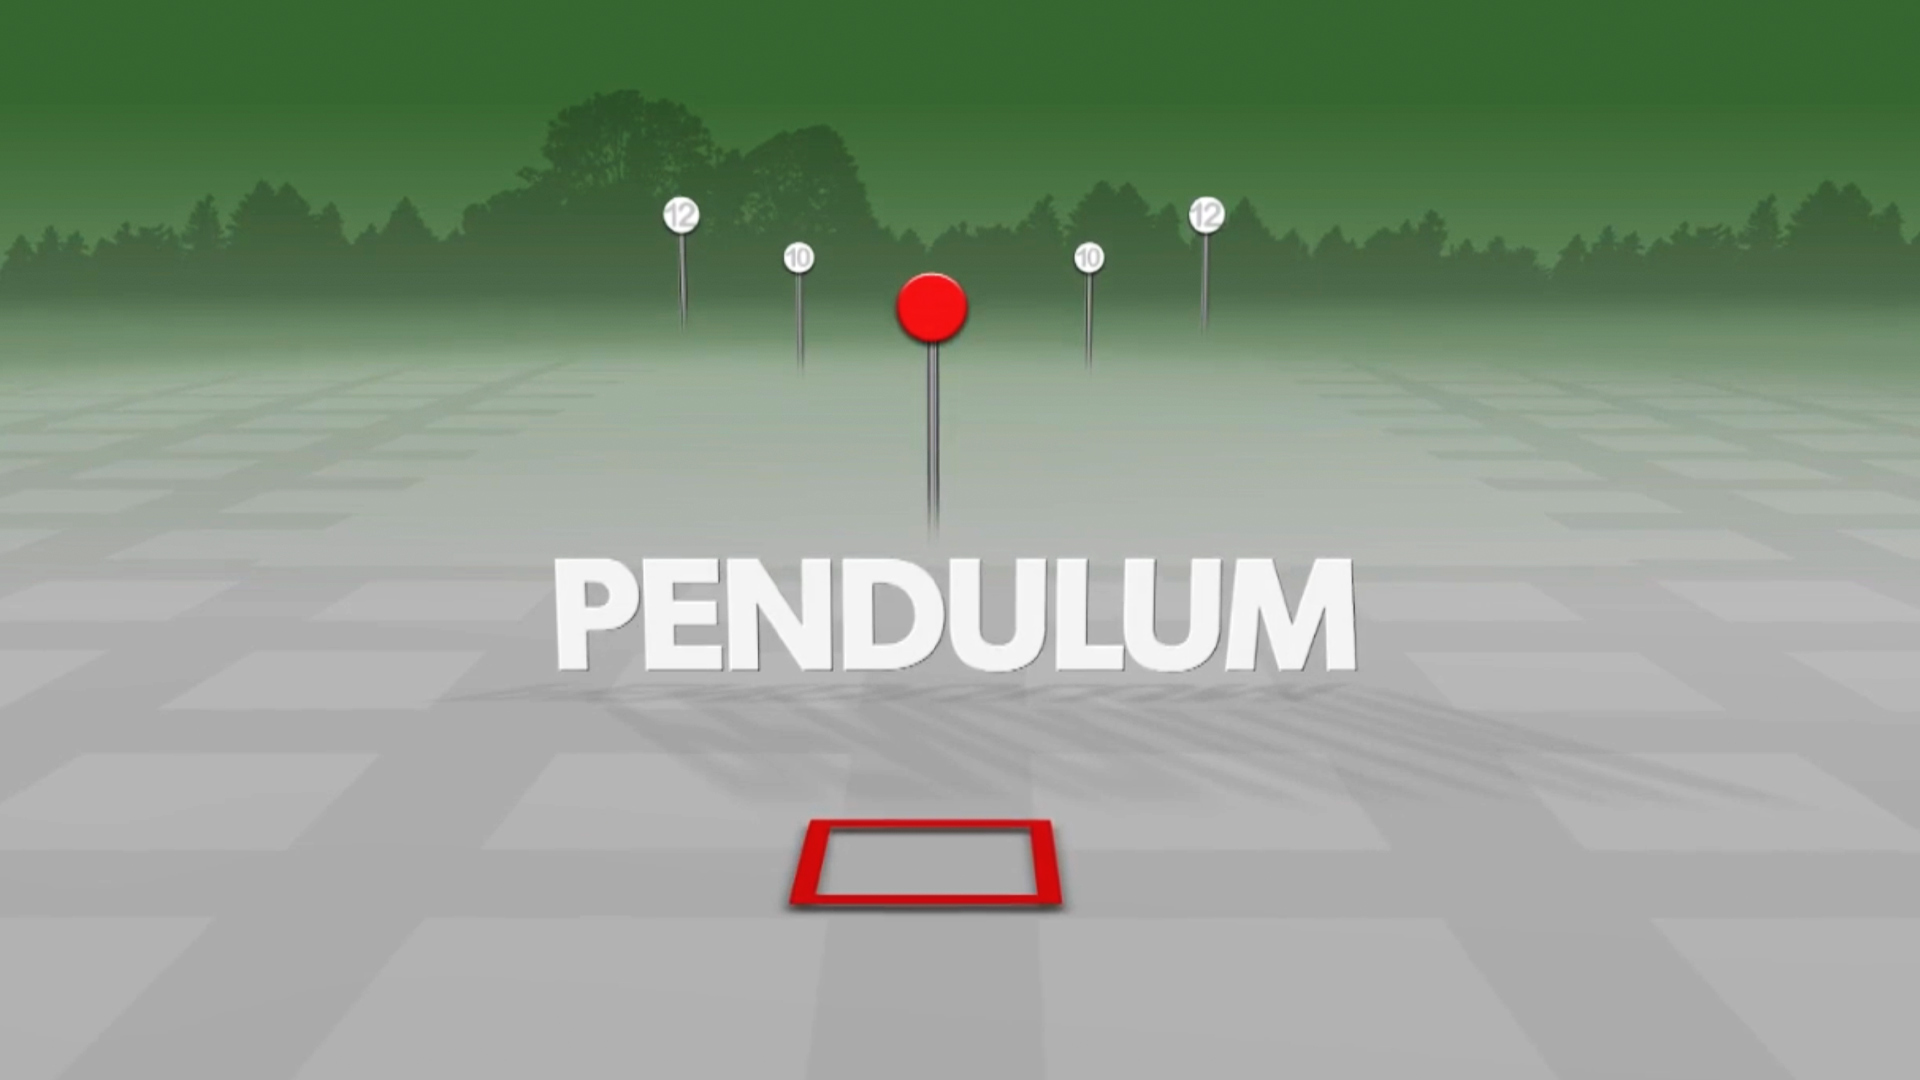 Pendulum stage